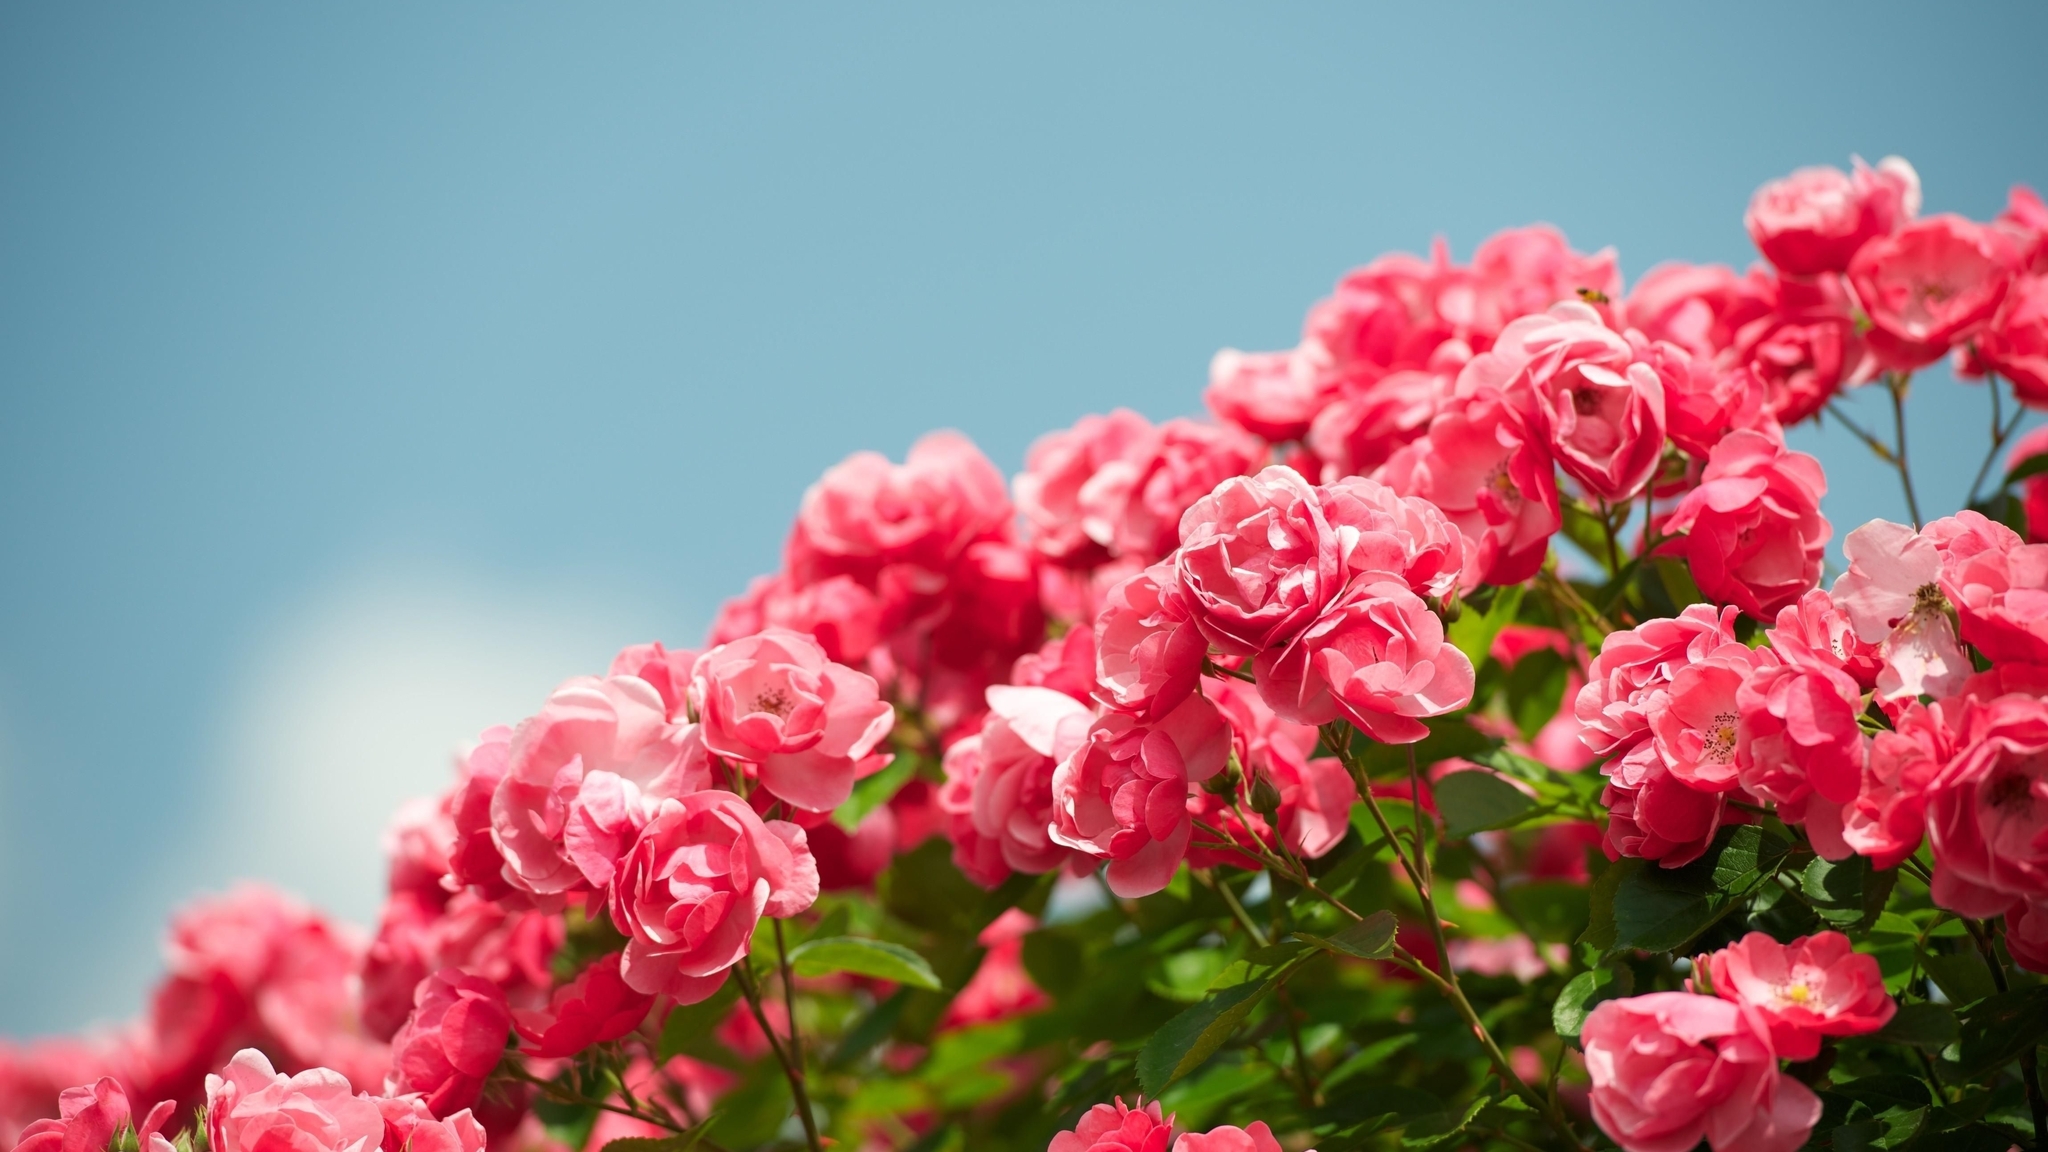 Image: Flowers, roses, shrub, sky